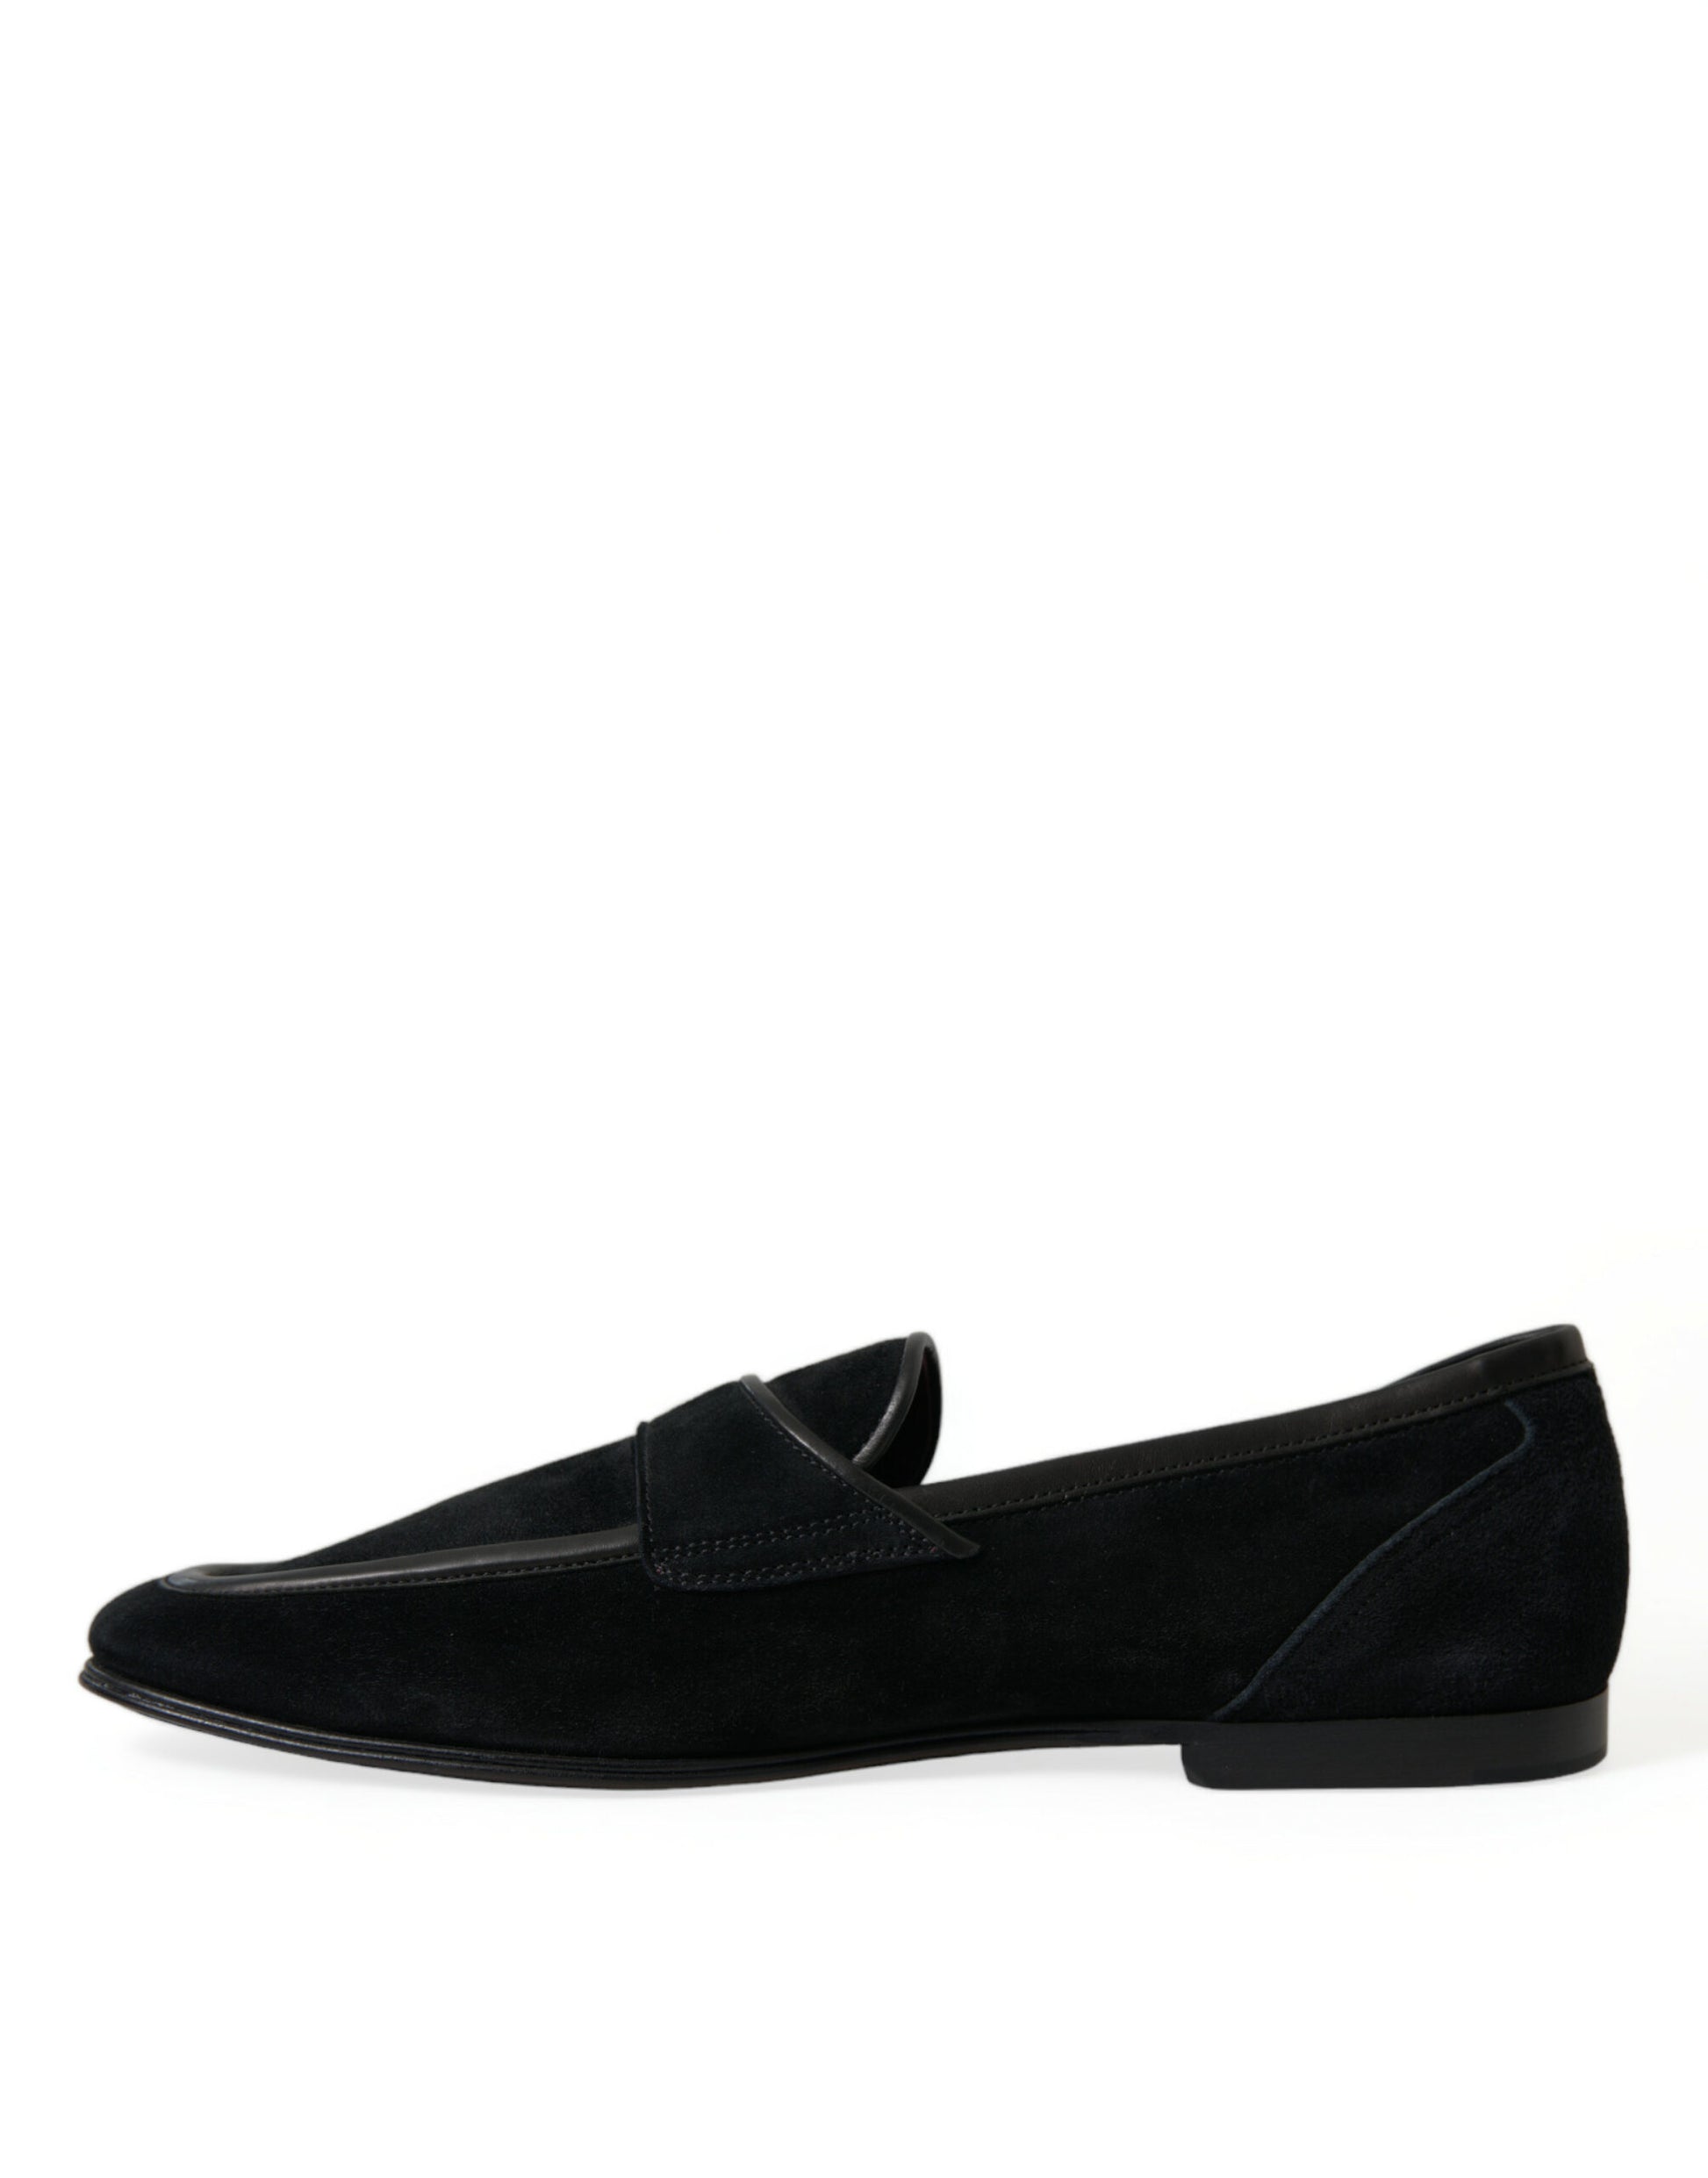 Fashionsarah.com Fashionsarah.com Dolce & Gabbana Black Velvet Slip On Loafers Dress Shoes